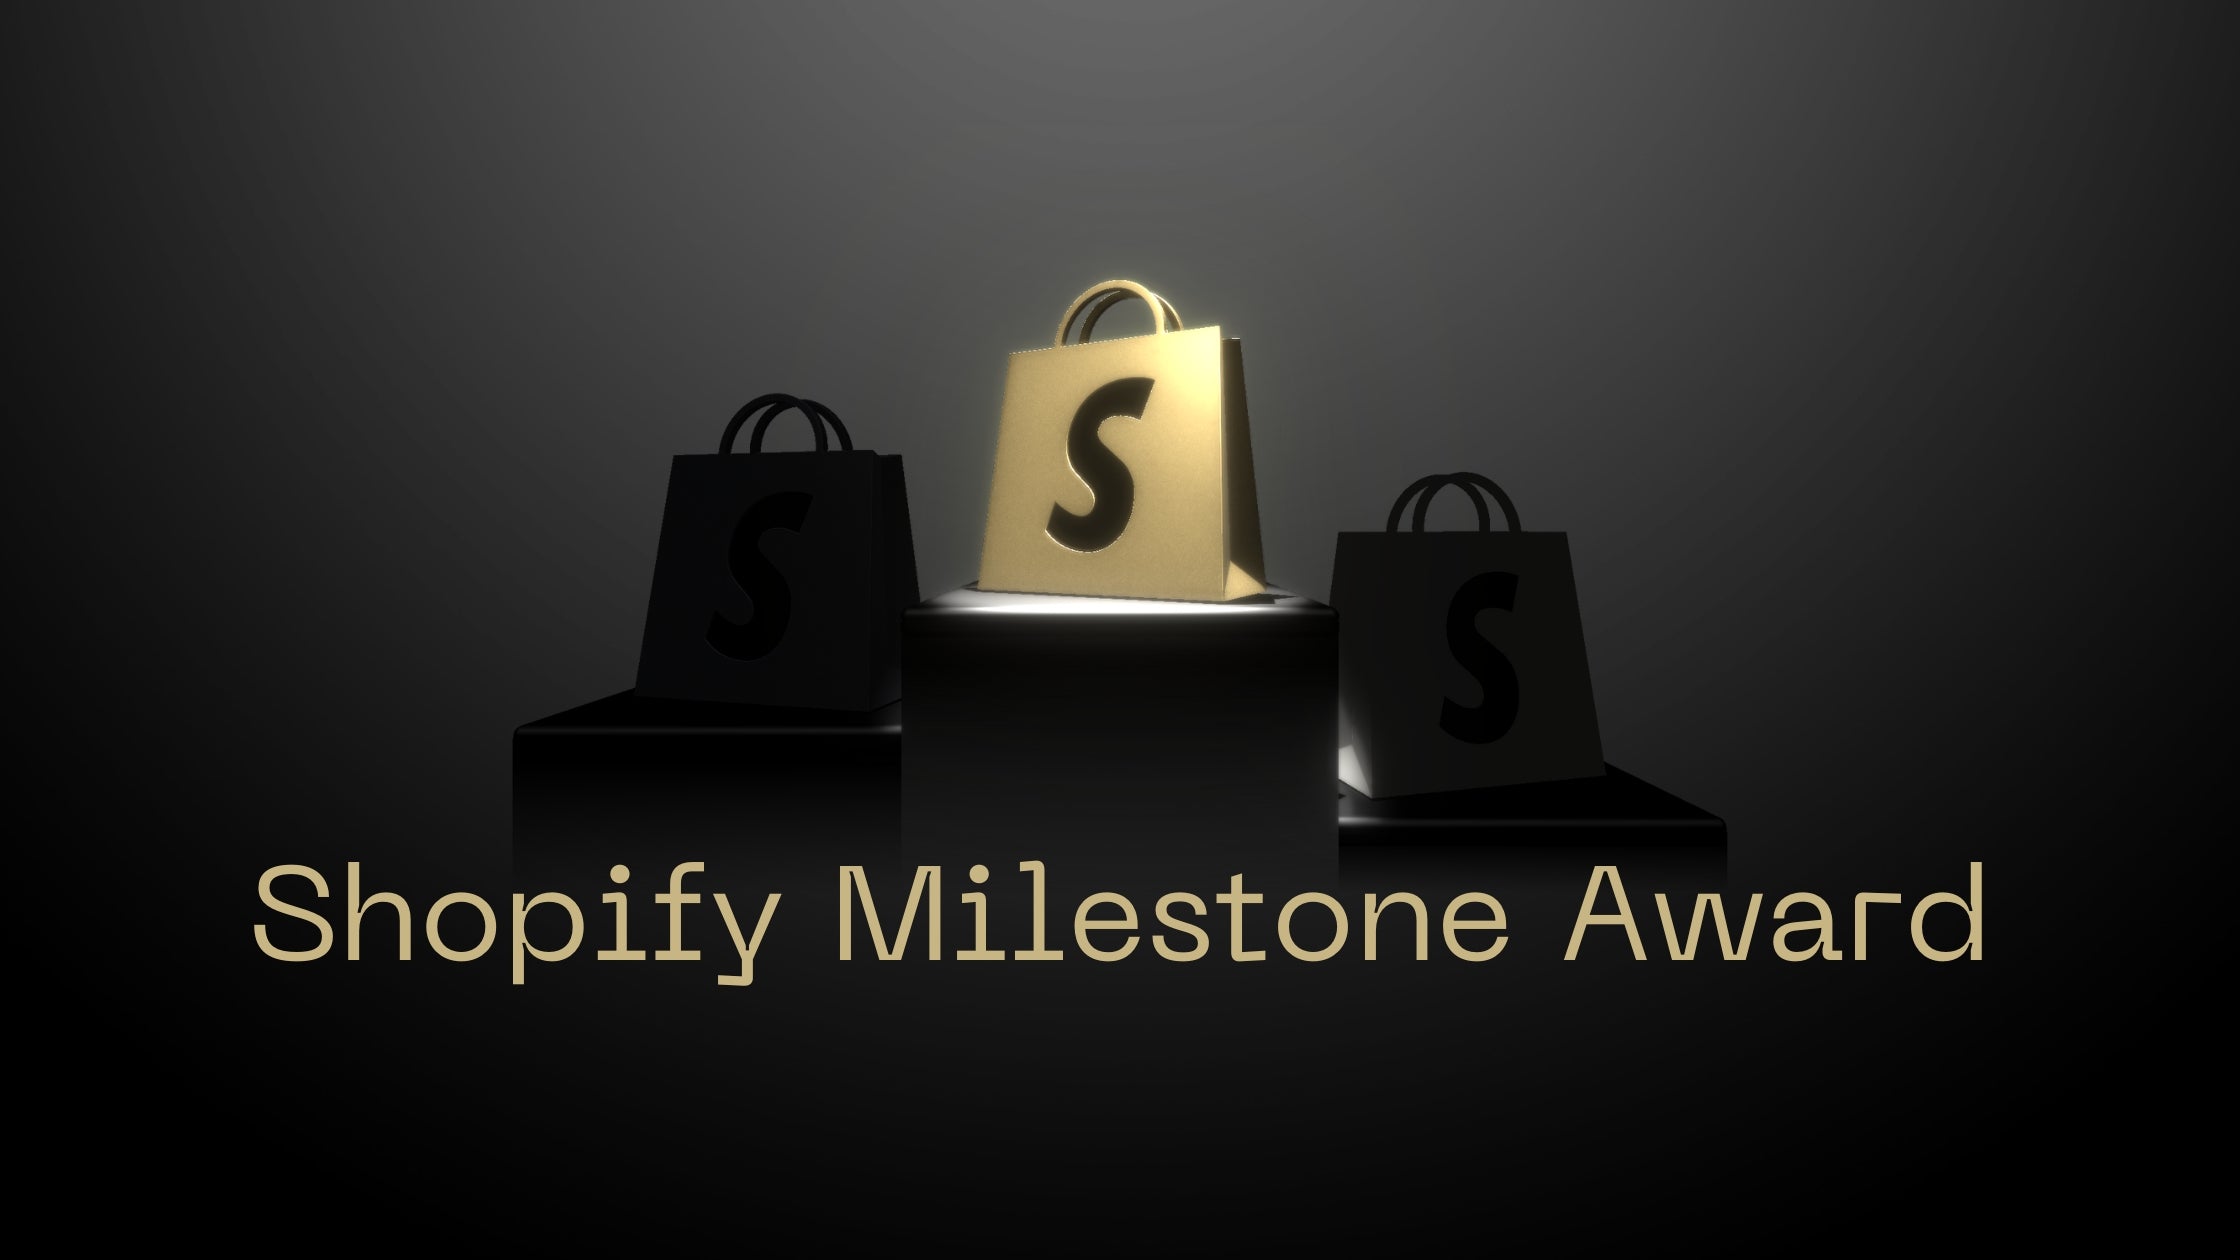 Rotai won shopify milestone awards